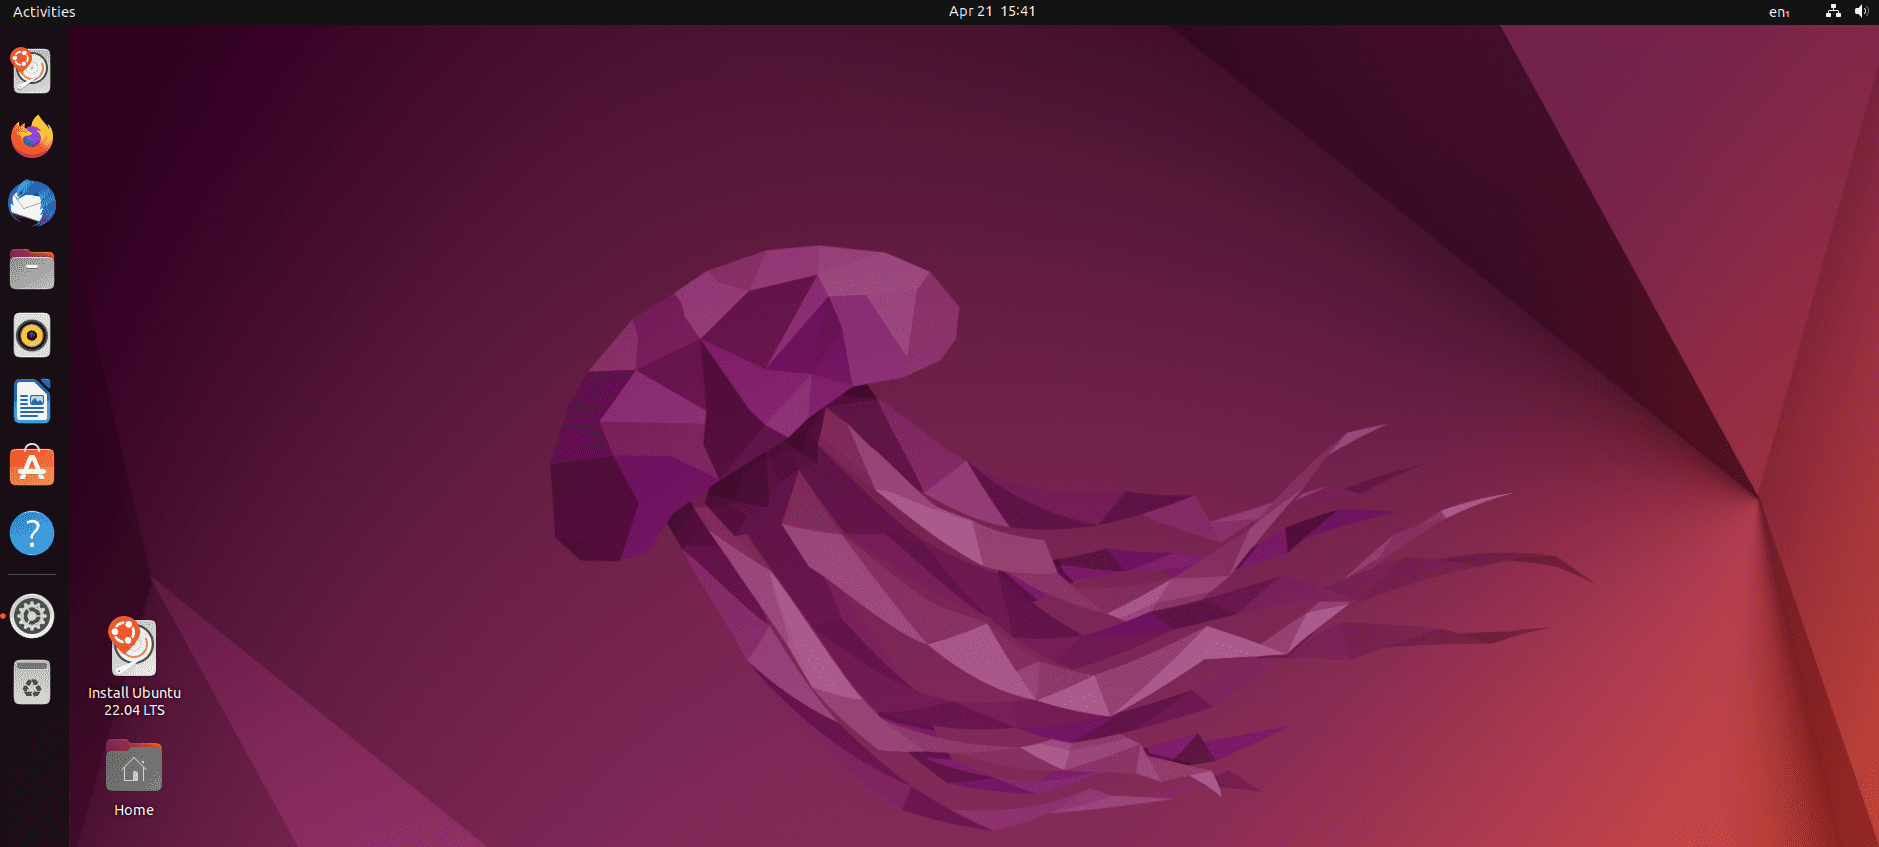 Ubuntu 22.04.1 LTS unlocks Ubuntu 20.04 LTS upgrades